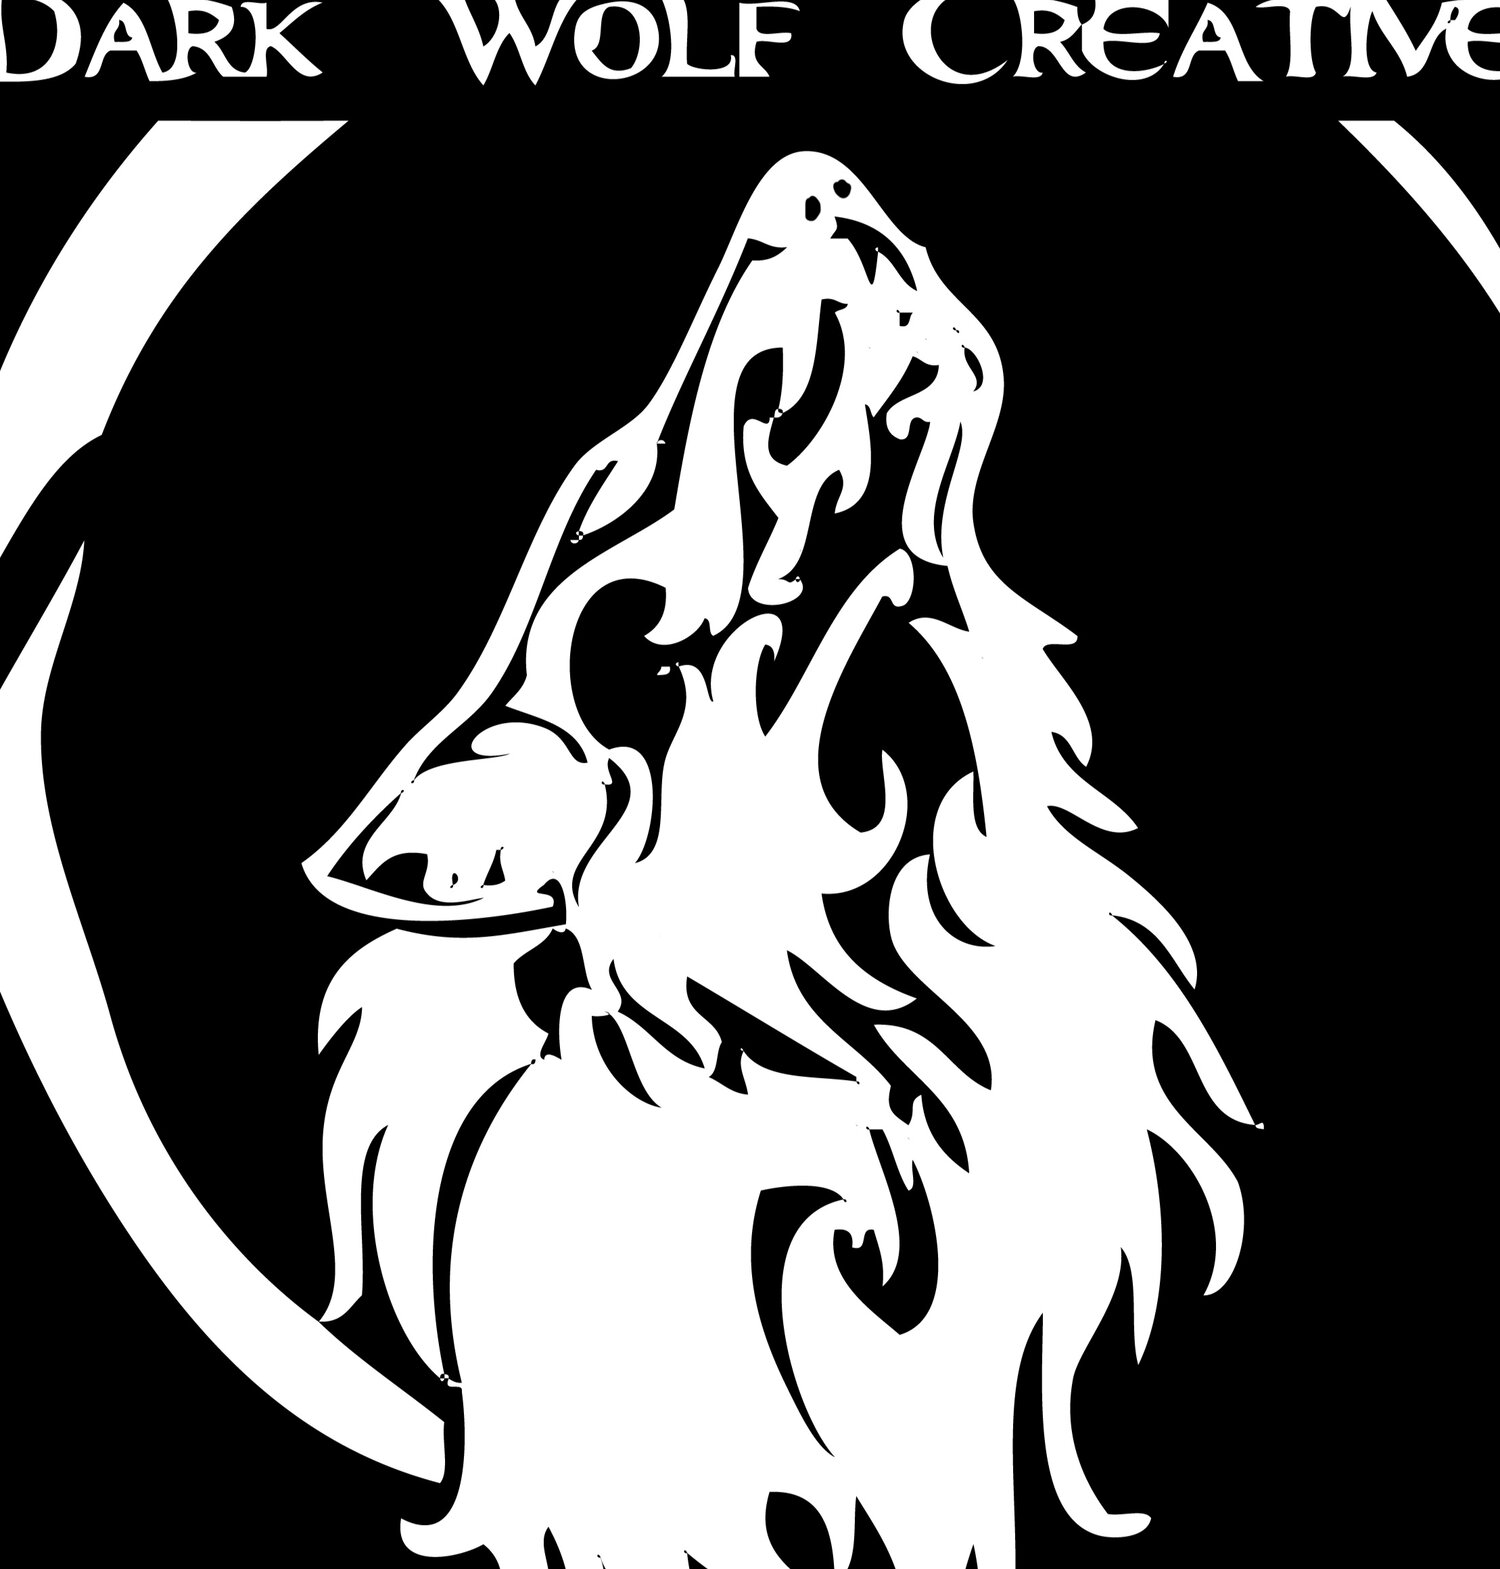 DarkWolf Creative